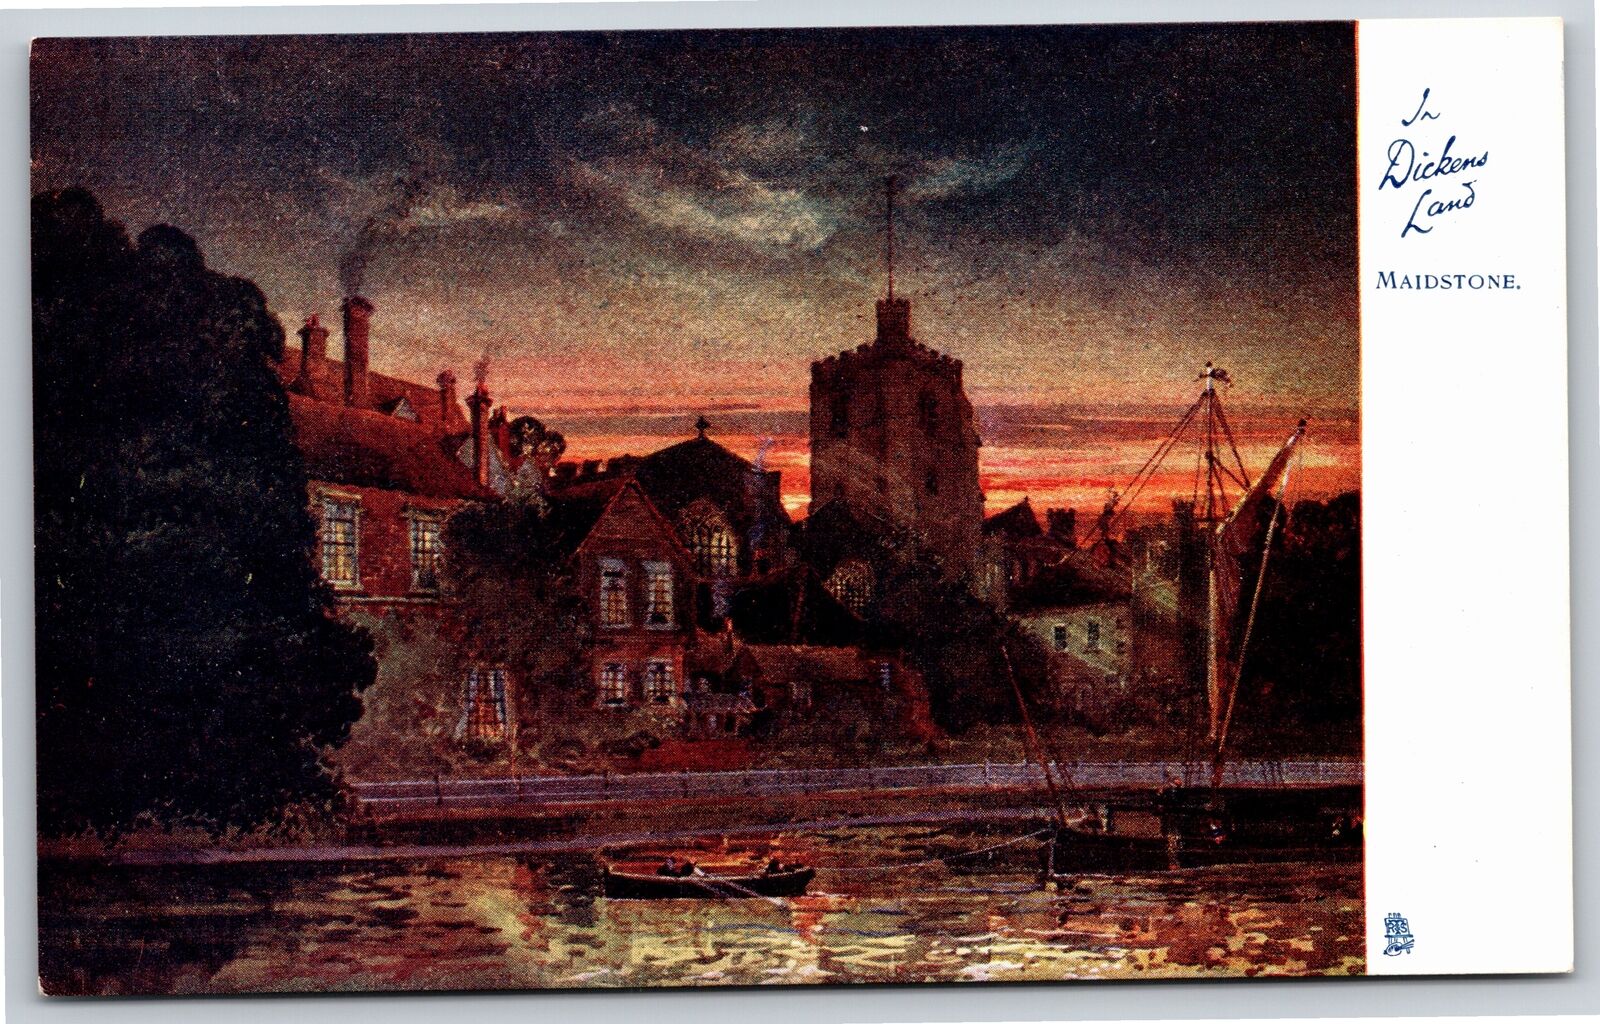 TUCK~Skyline & River Scene Dickens Land Maidstone~Vintage Postcard